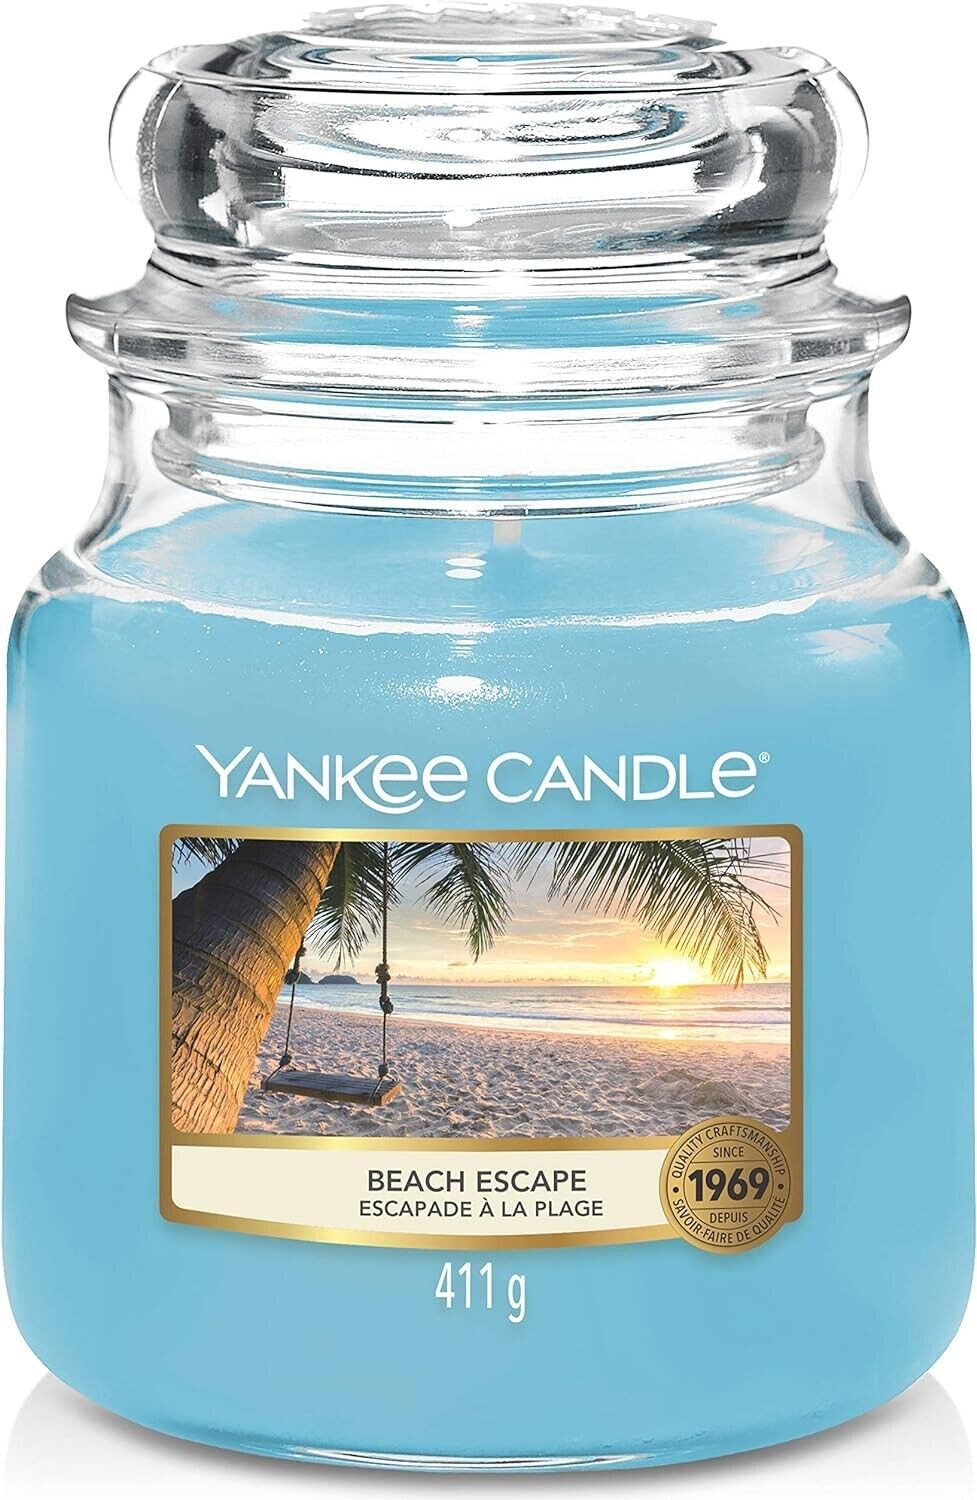 Yankee Candle Jar Medium Beach Escape Soy Wax Candle 411g Burning Time 75Hr